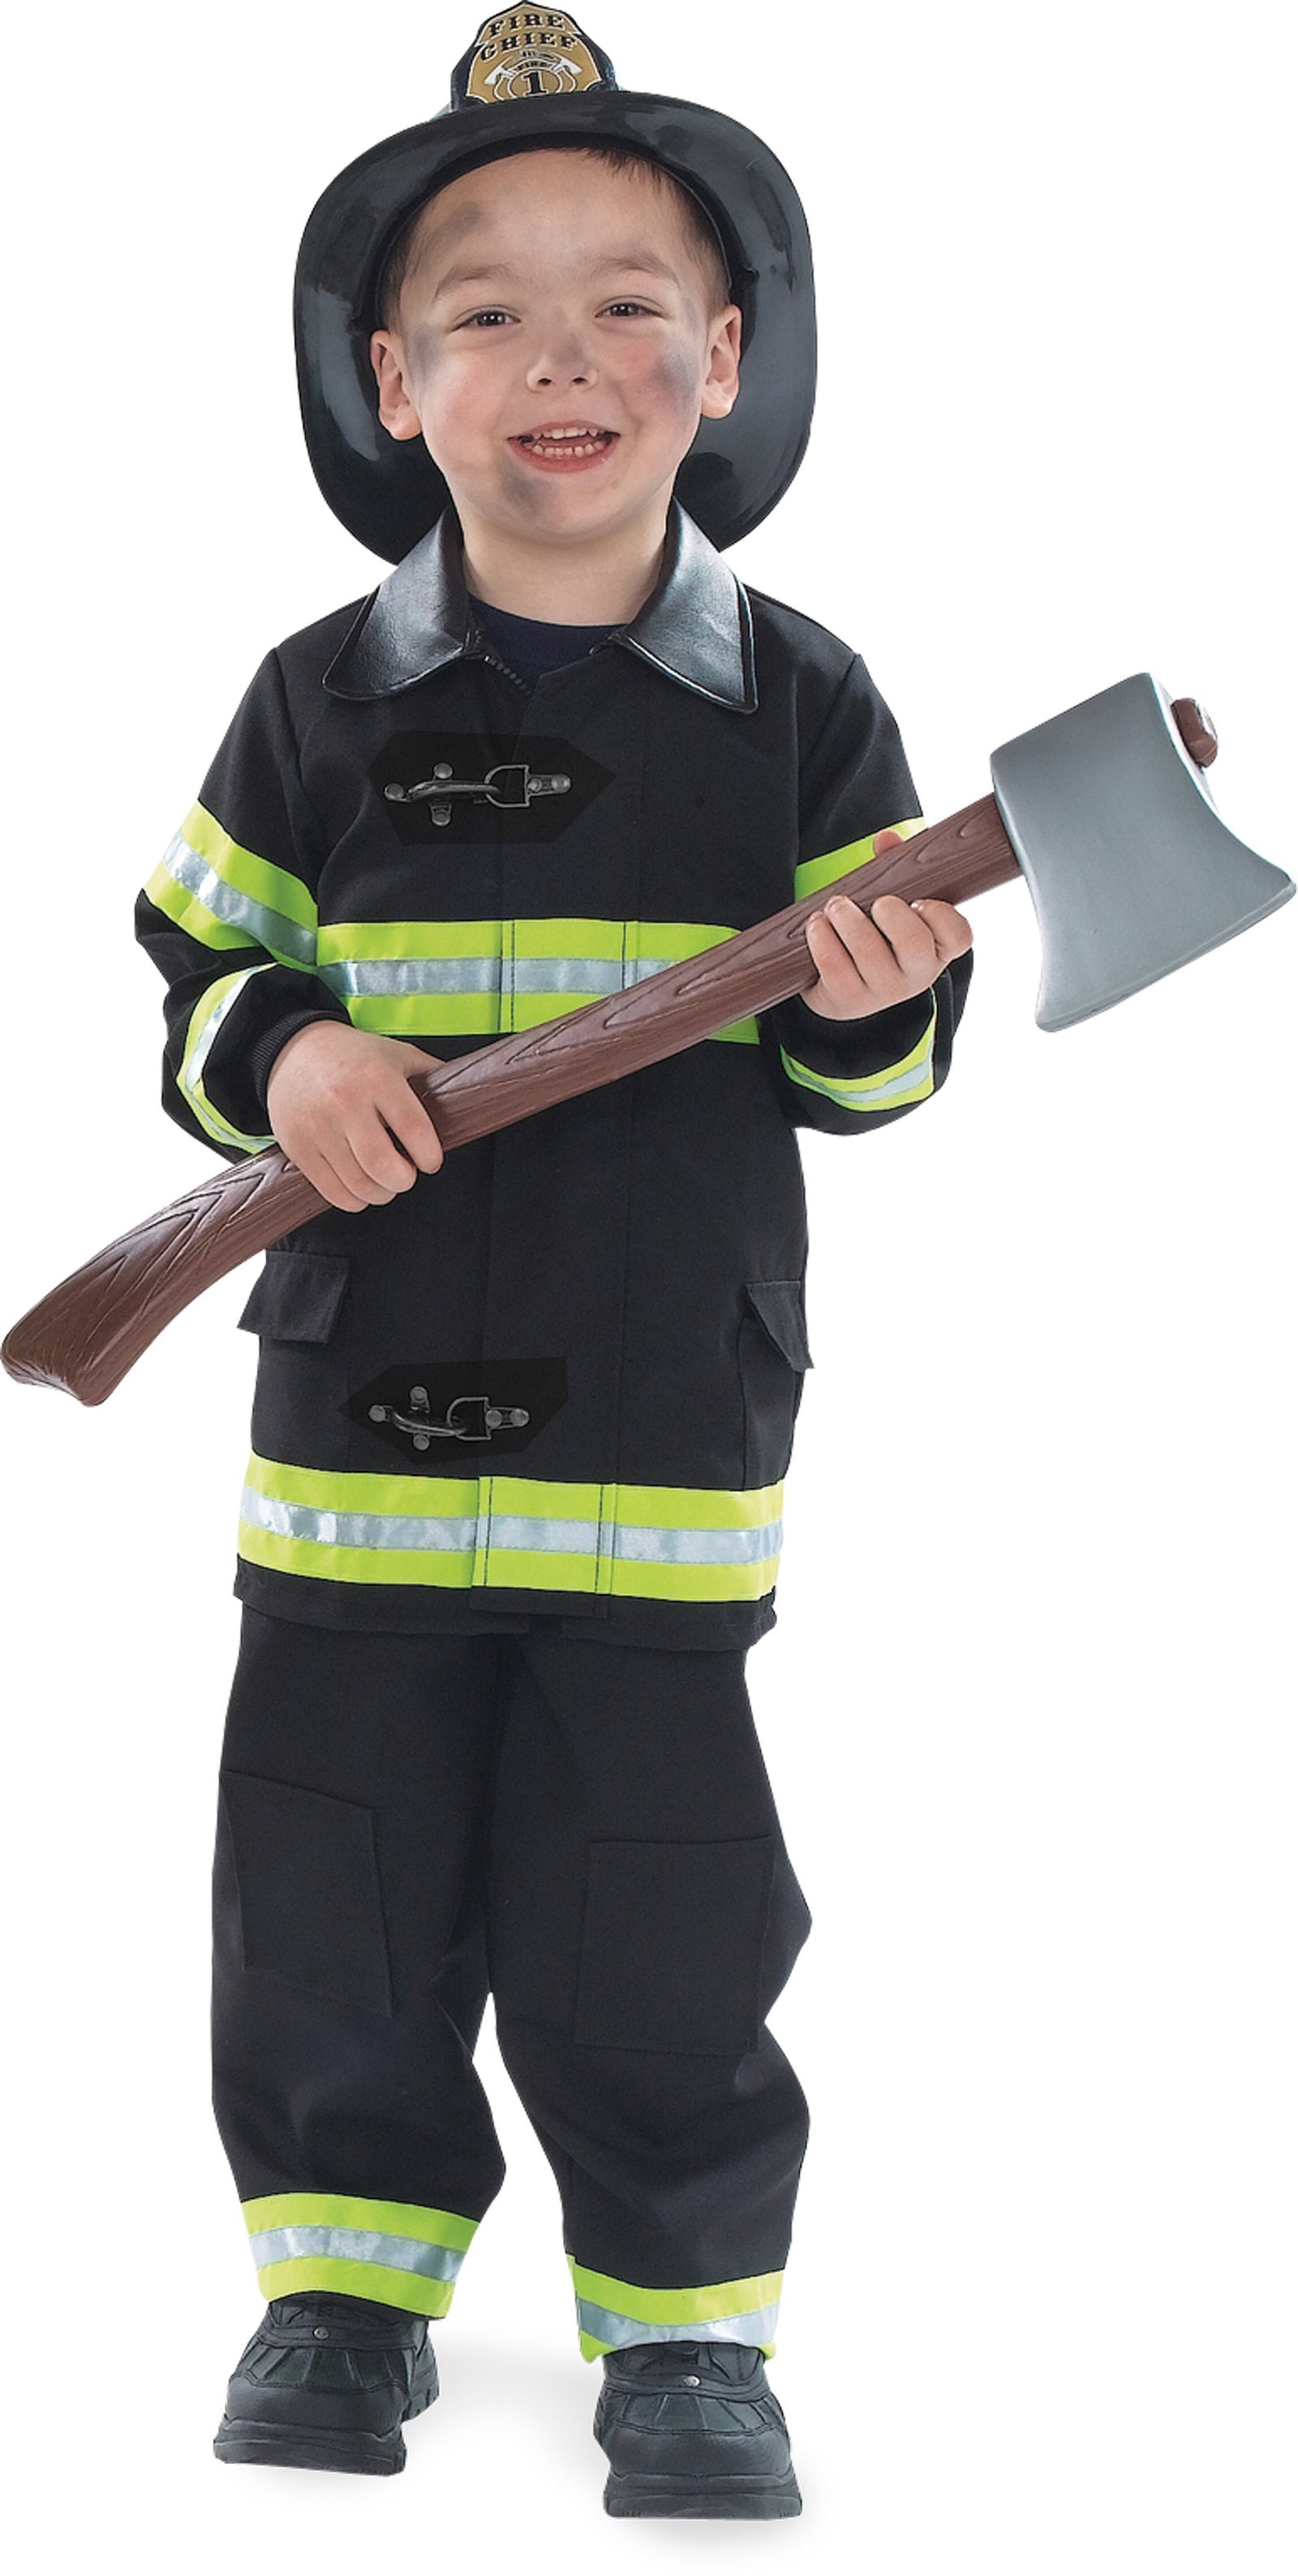 Firefighter Black Child Costume